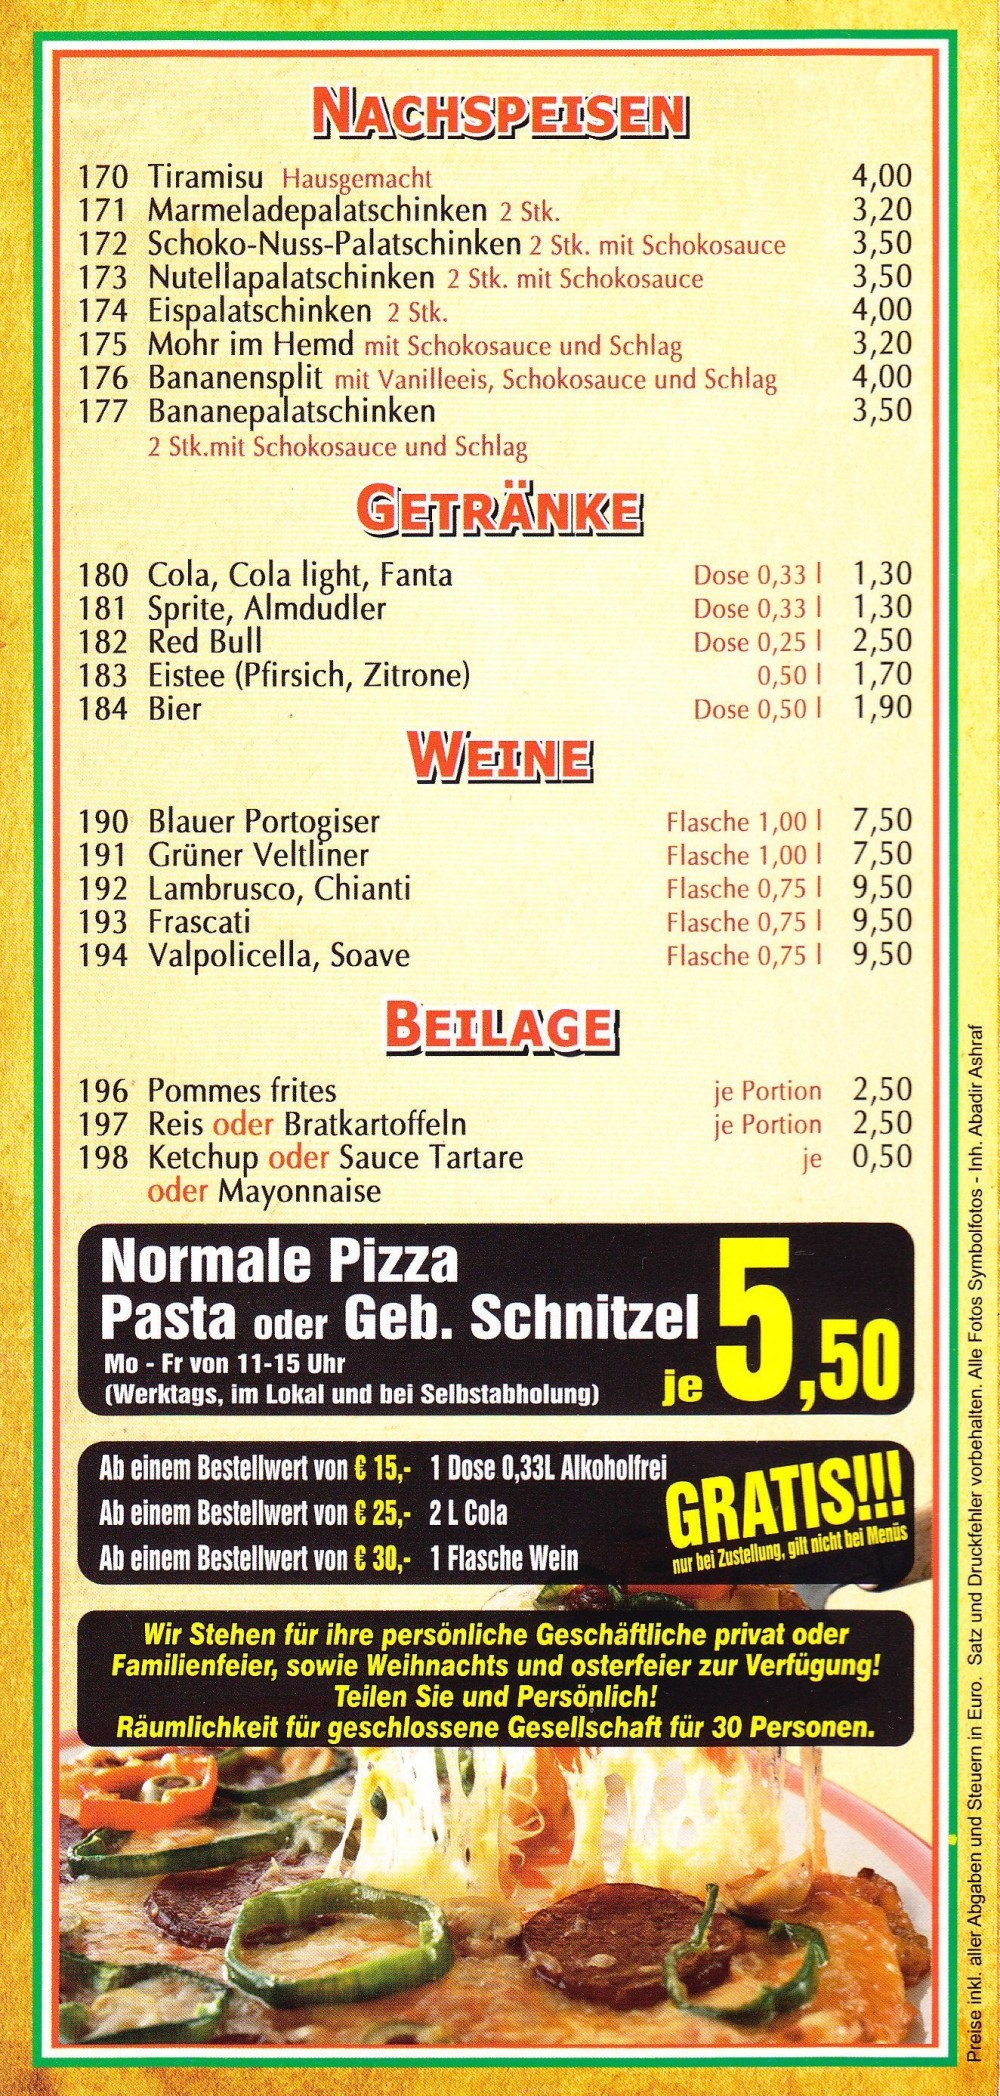 Pizzeria Venezia Flyer Seite 6 - Ristorante Pizzeria Venezia - Wien